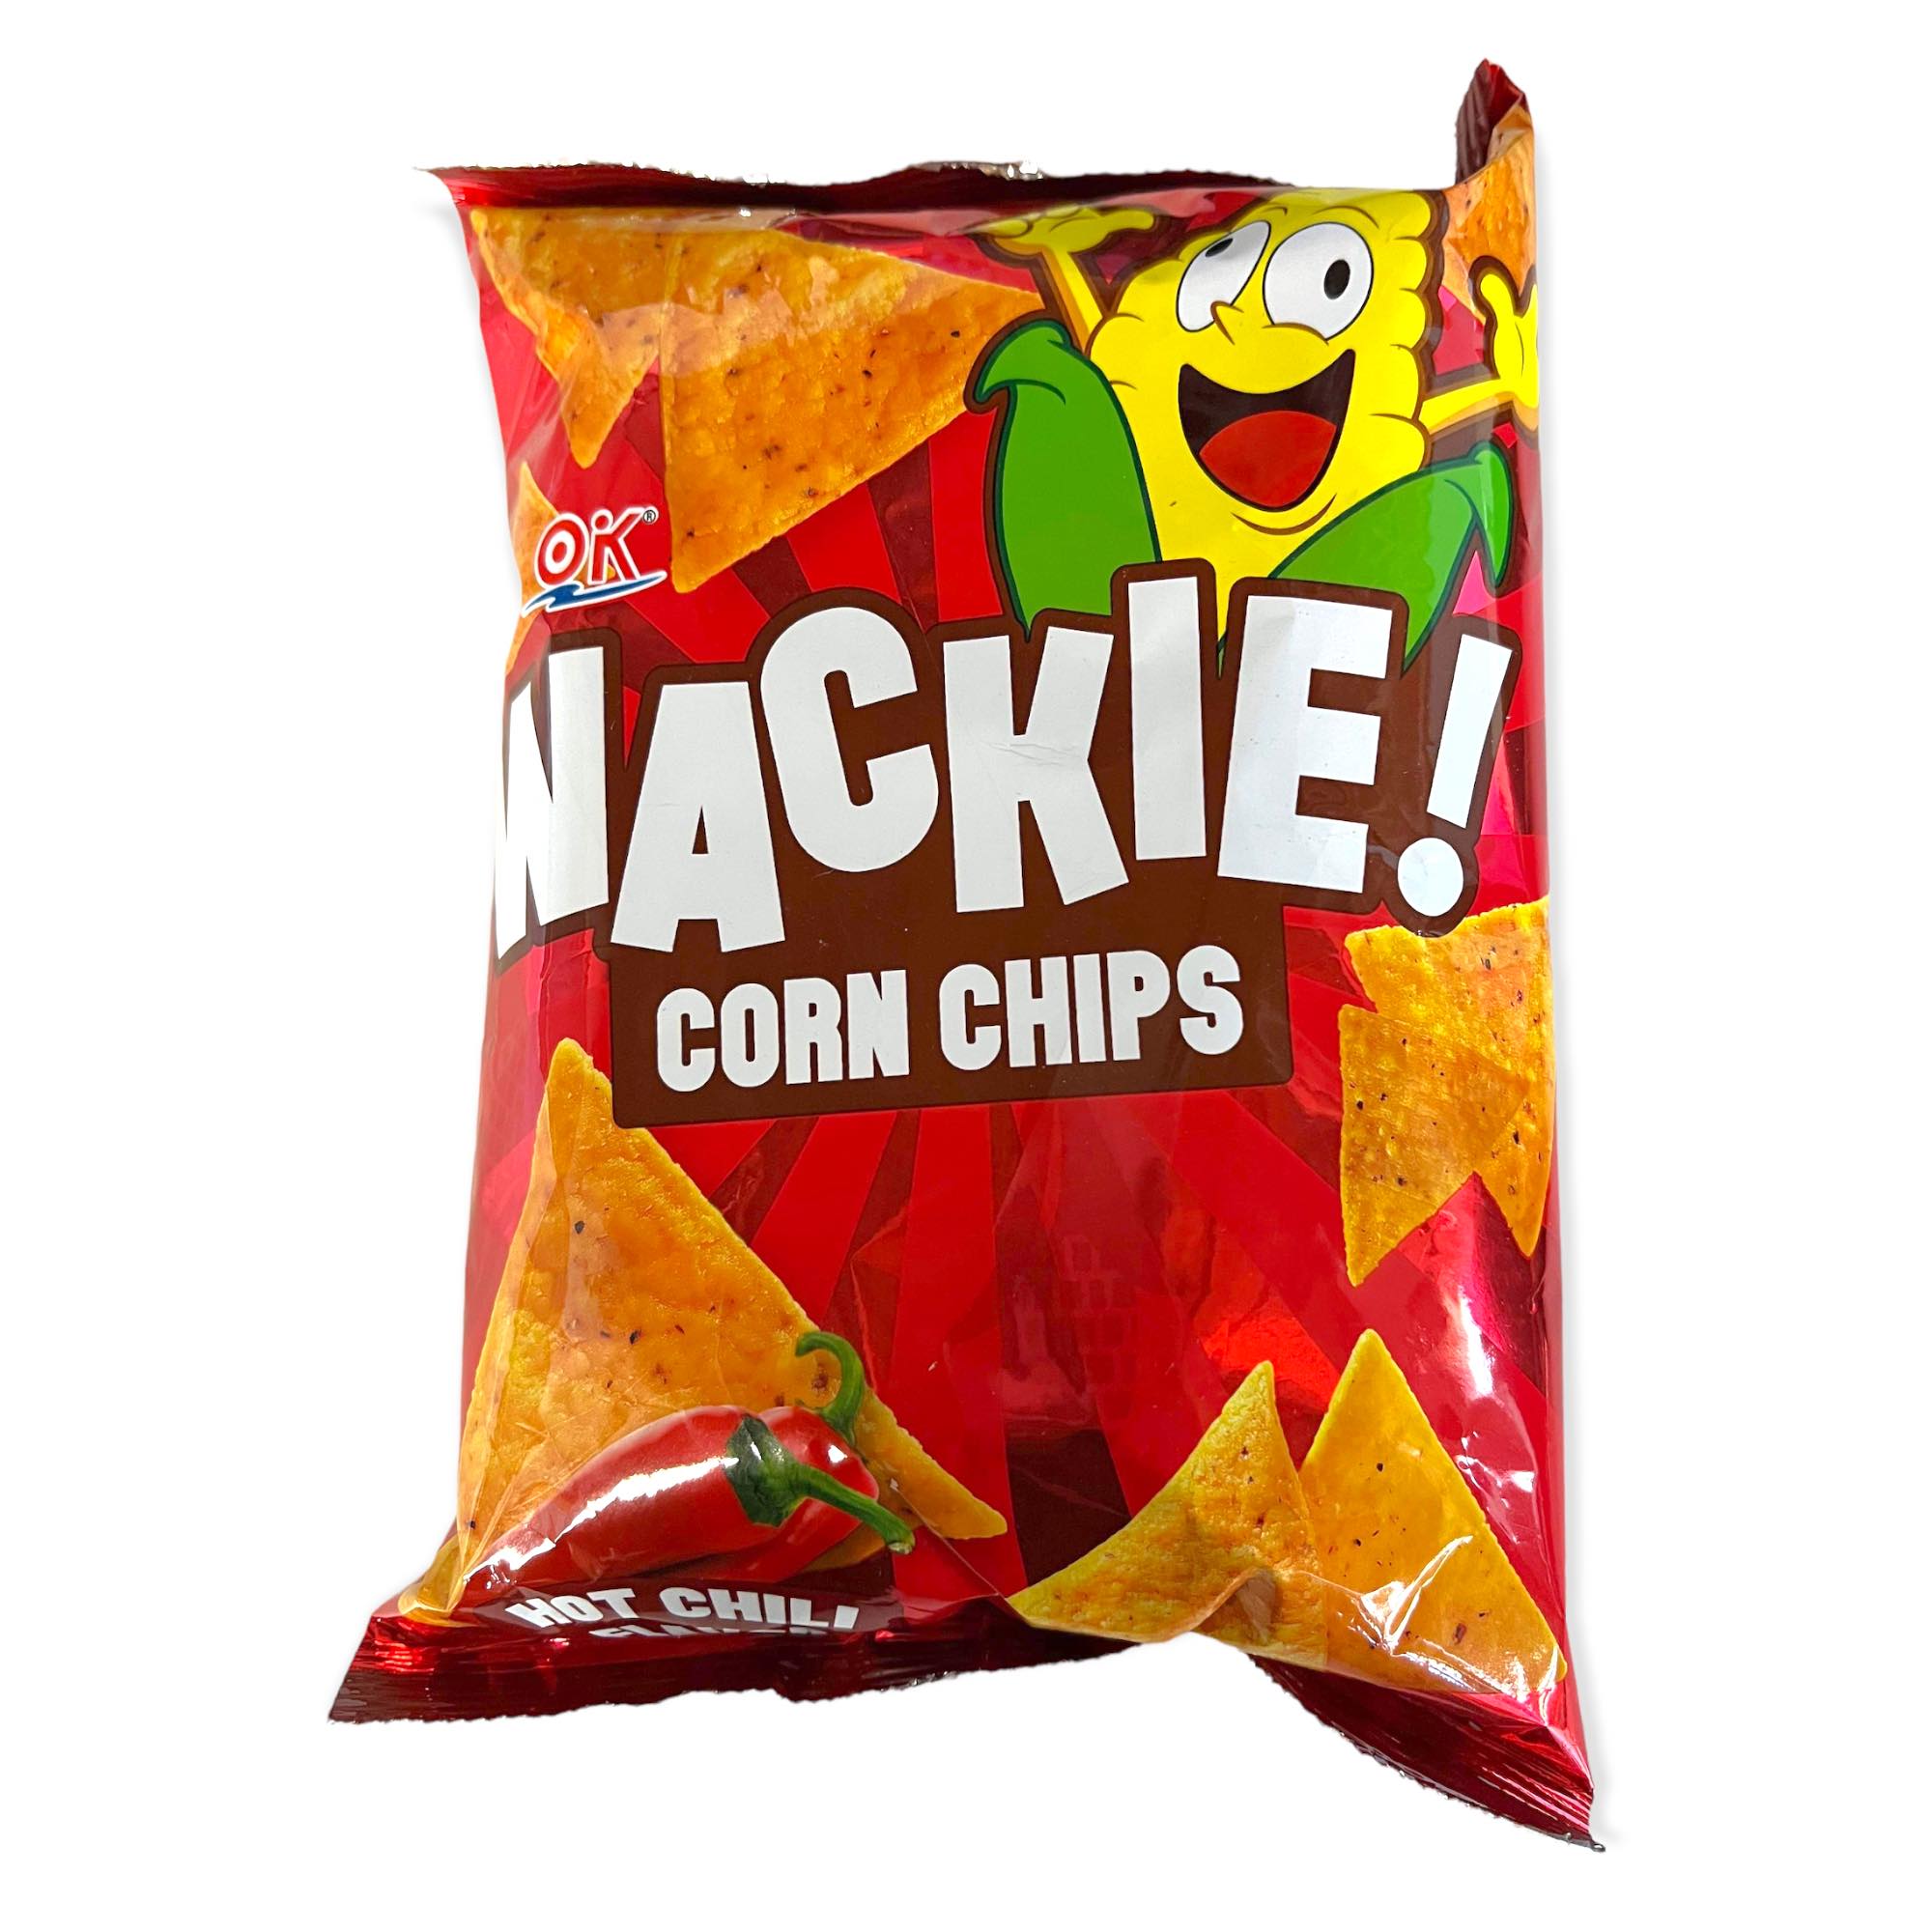 OK - Wackie! - Corn Chips - Hot Chili - 100 G